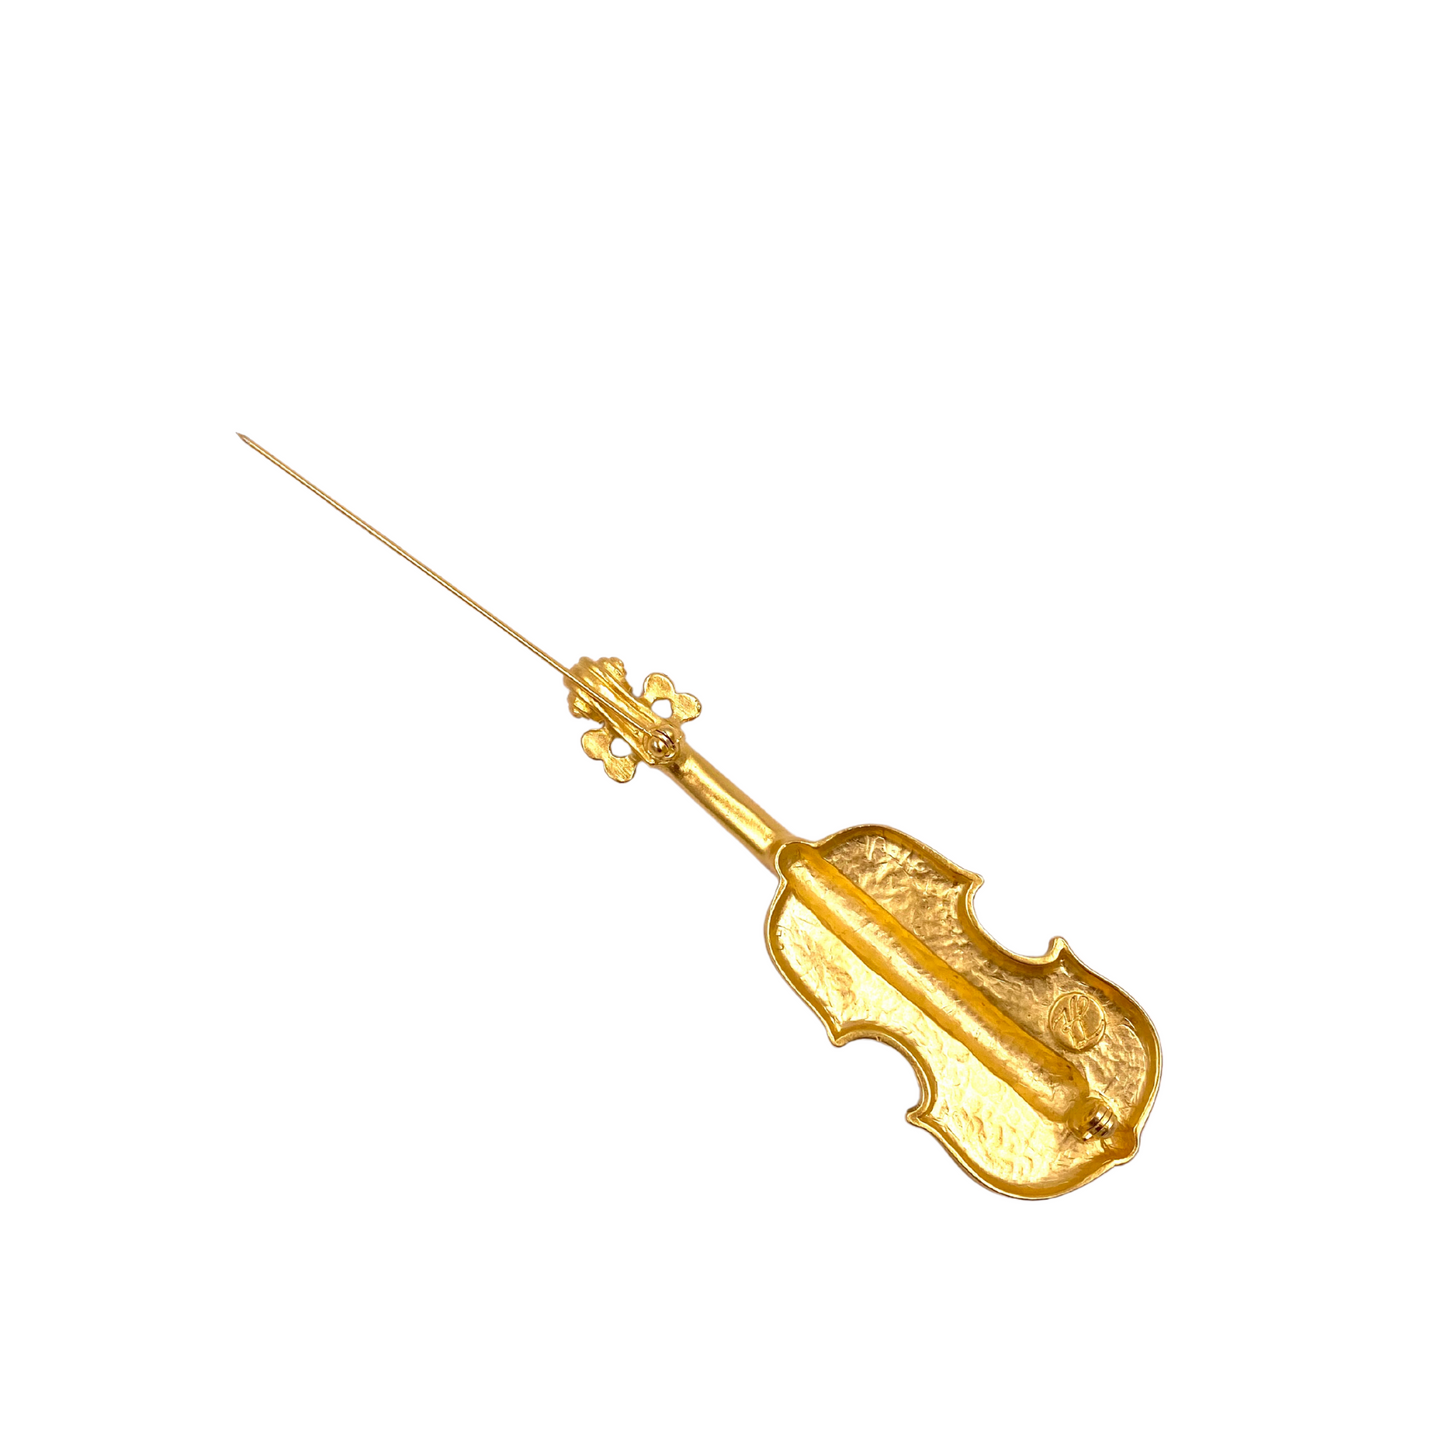 Karl Lagerfeld Cello Brooch